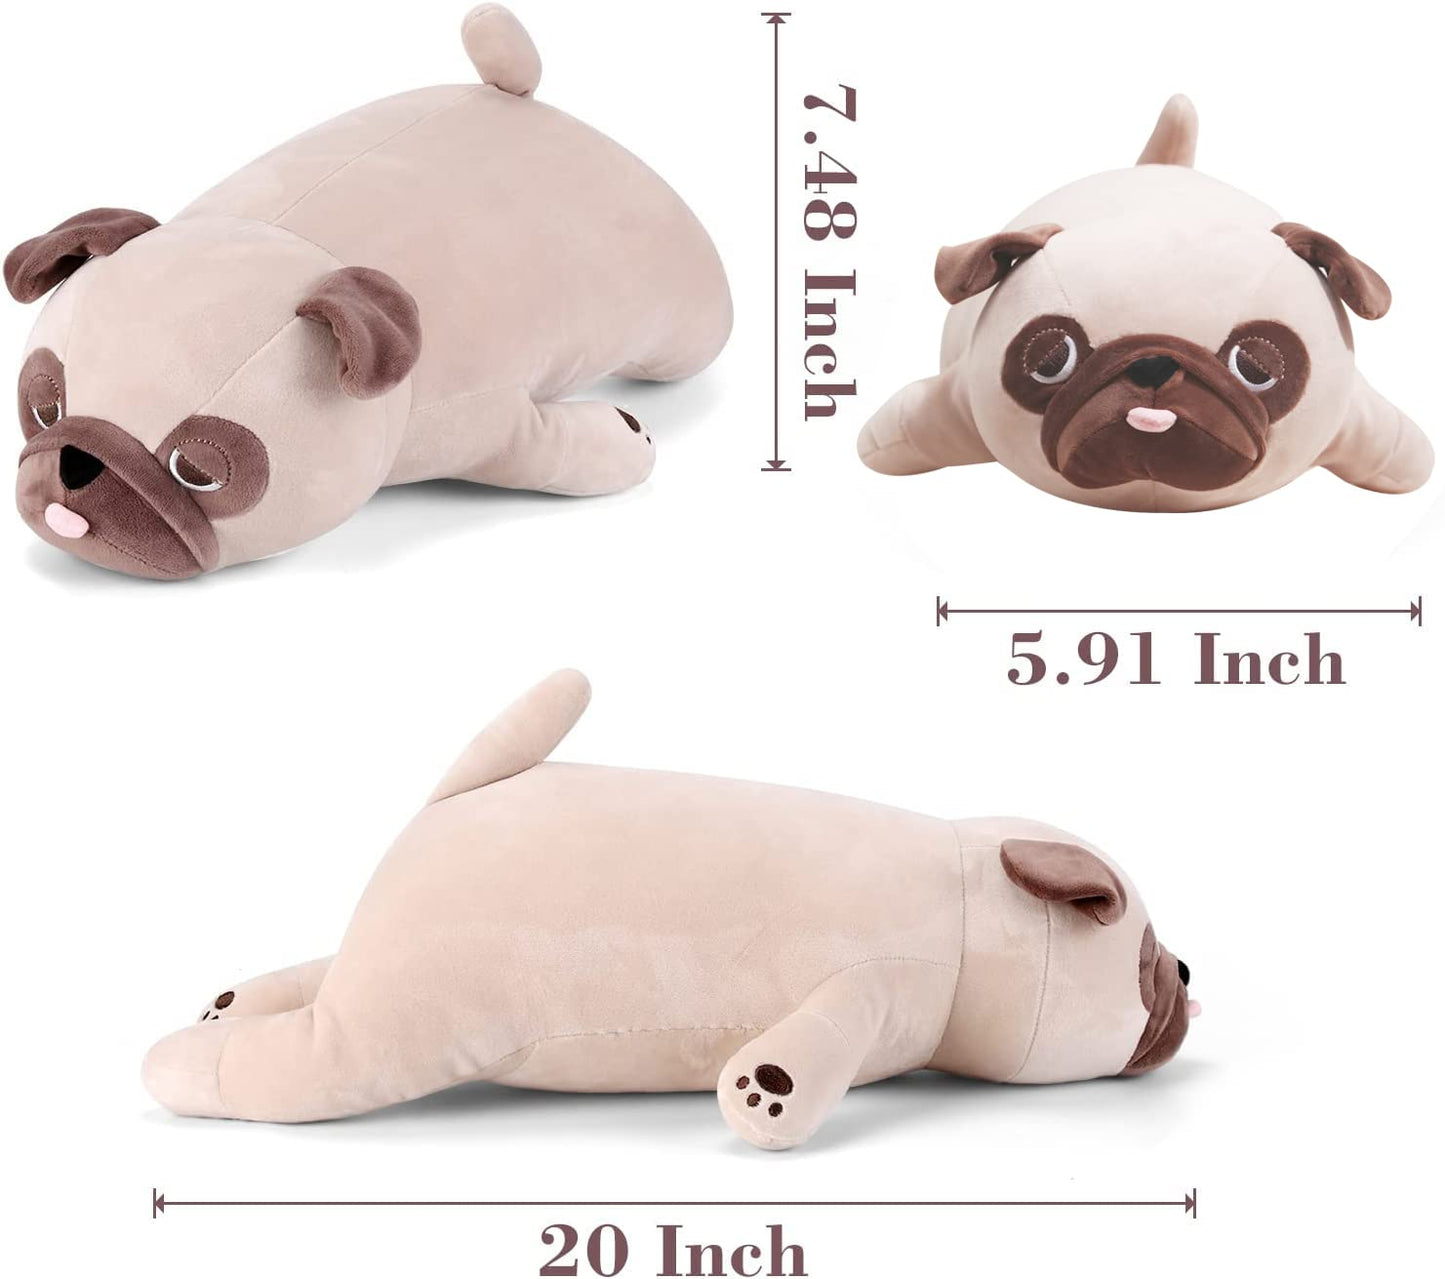 Aixini Cute Soft Lying Pug Dog Stuffed Animal Pillow Plush